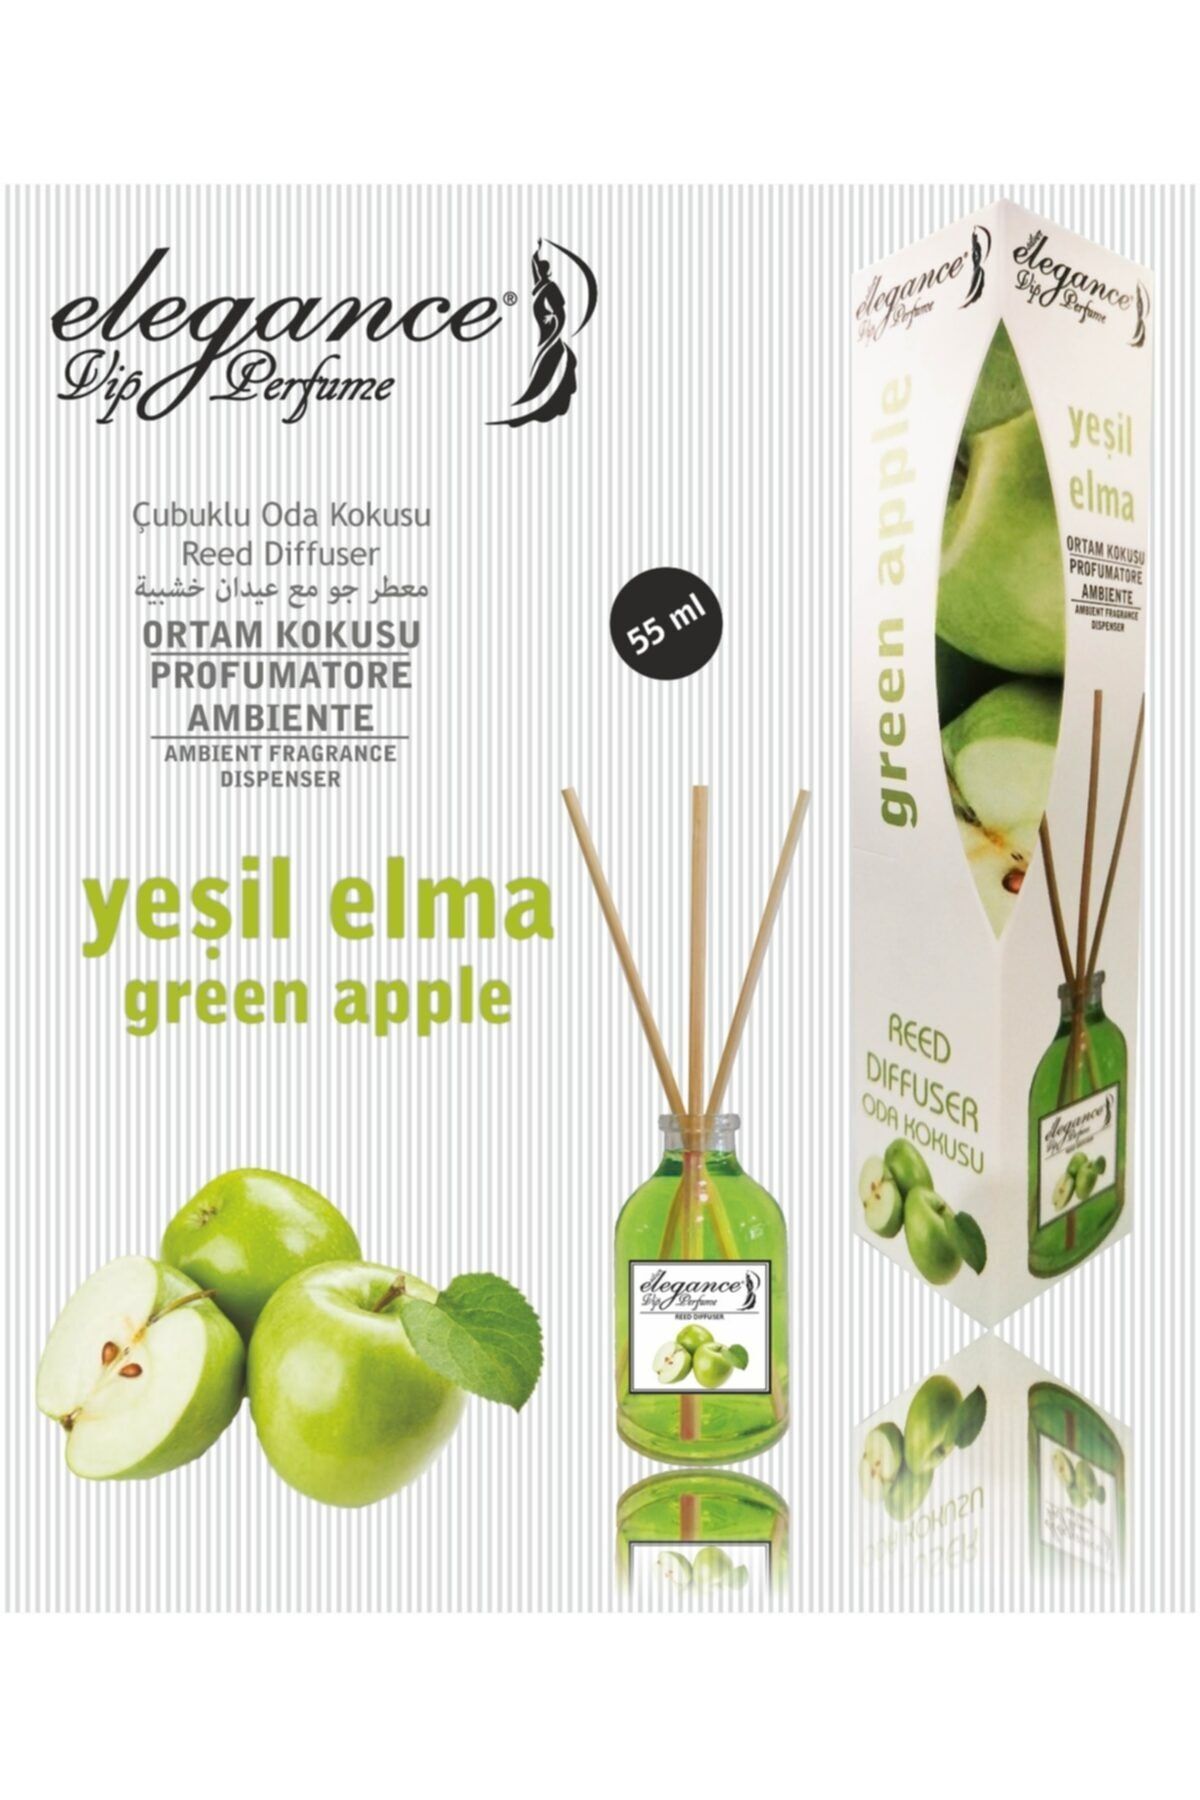 Elegance vip Perfume Yeşil Elma Reed Diffuser Bambu Çubuklu Oda Kokusu 55 ml